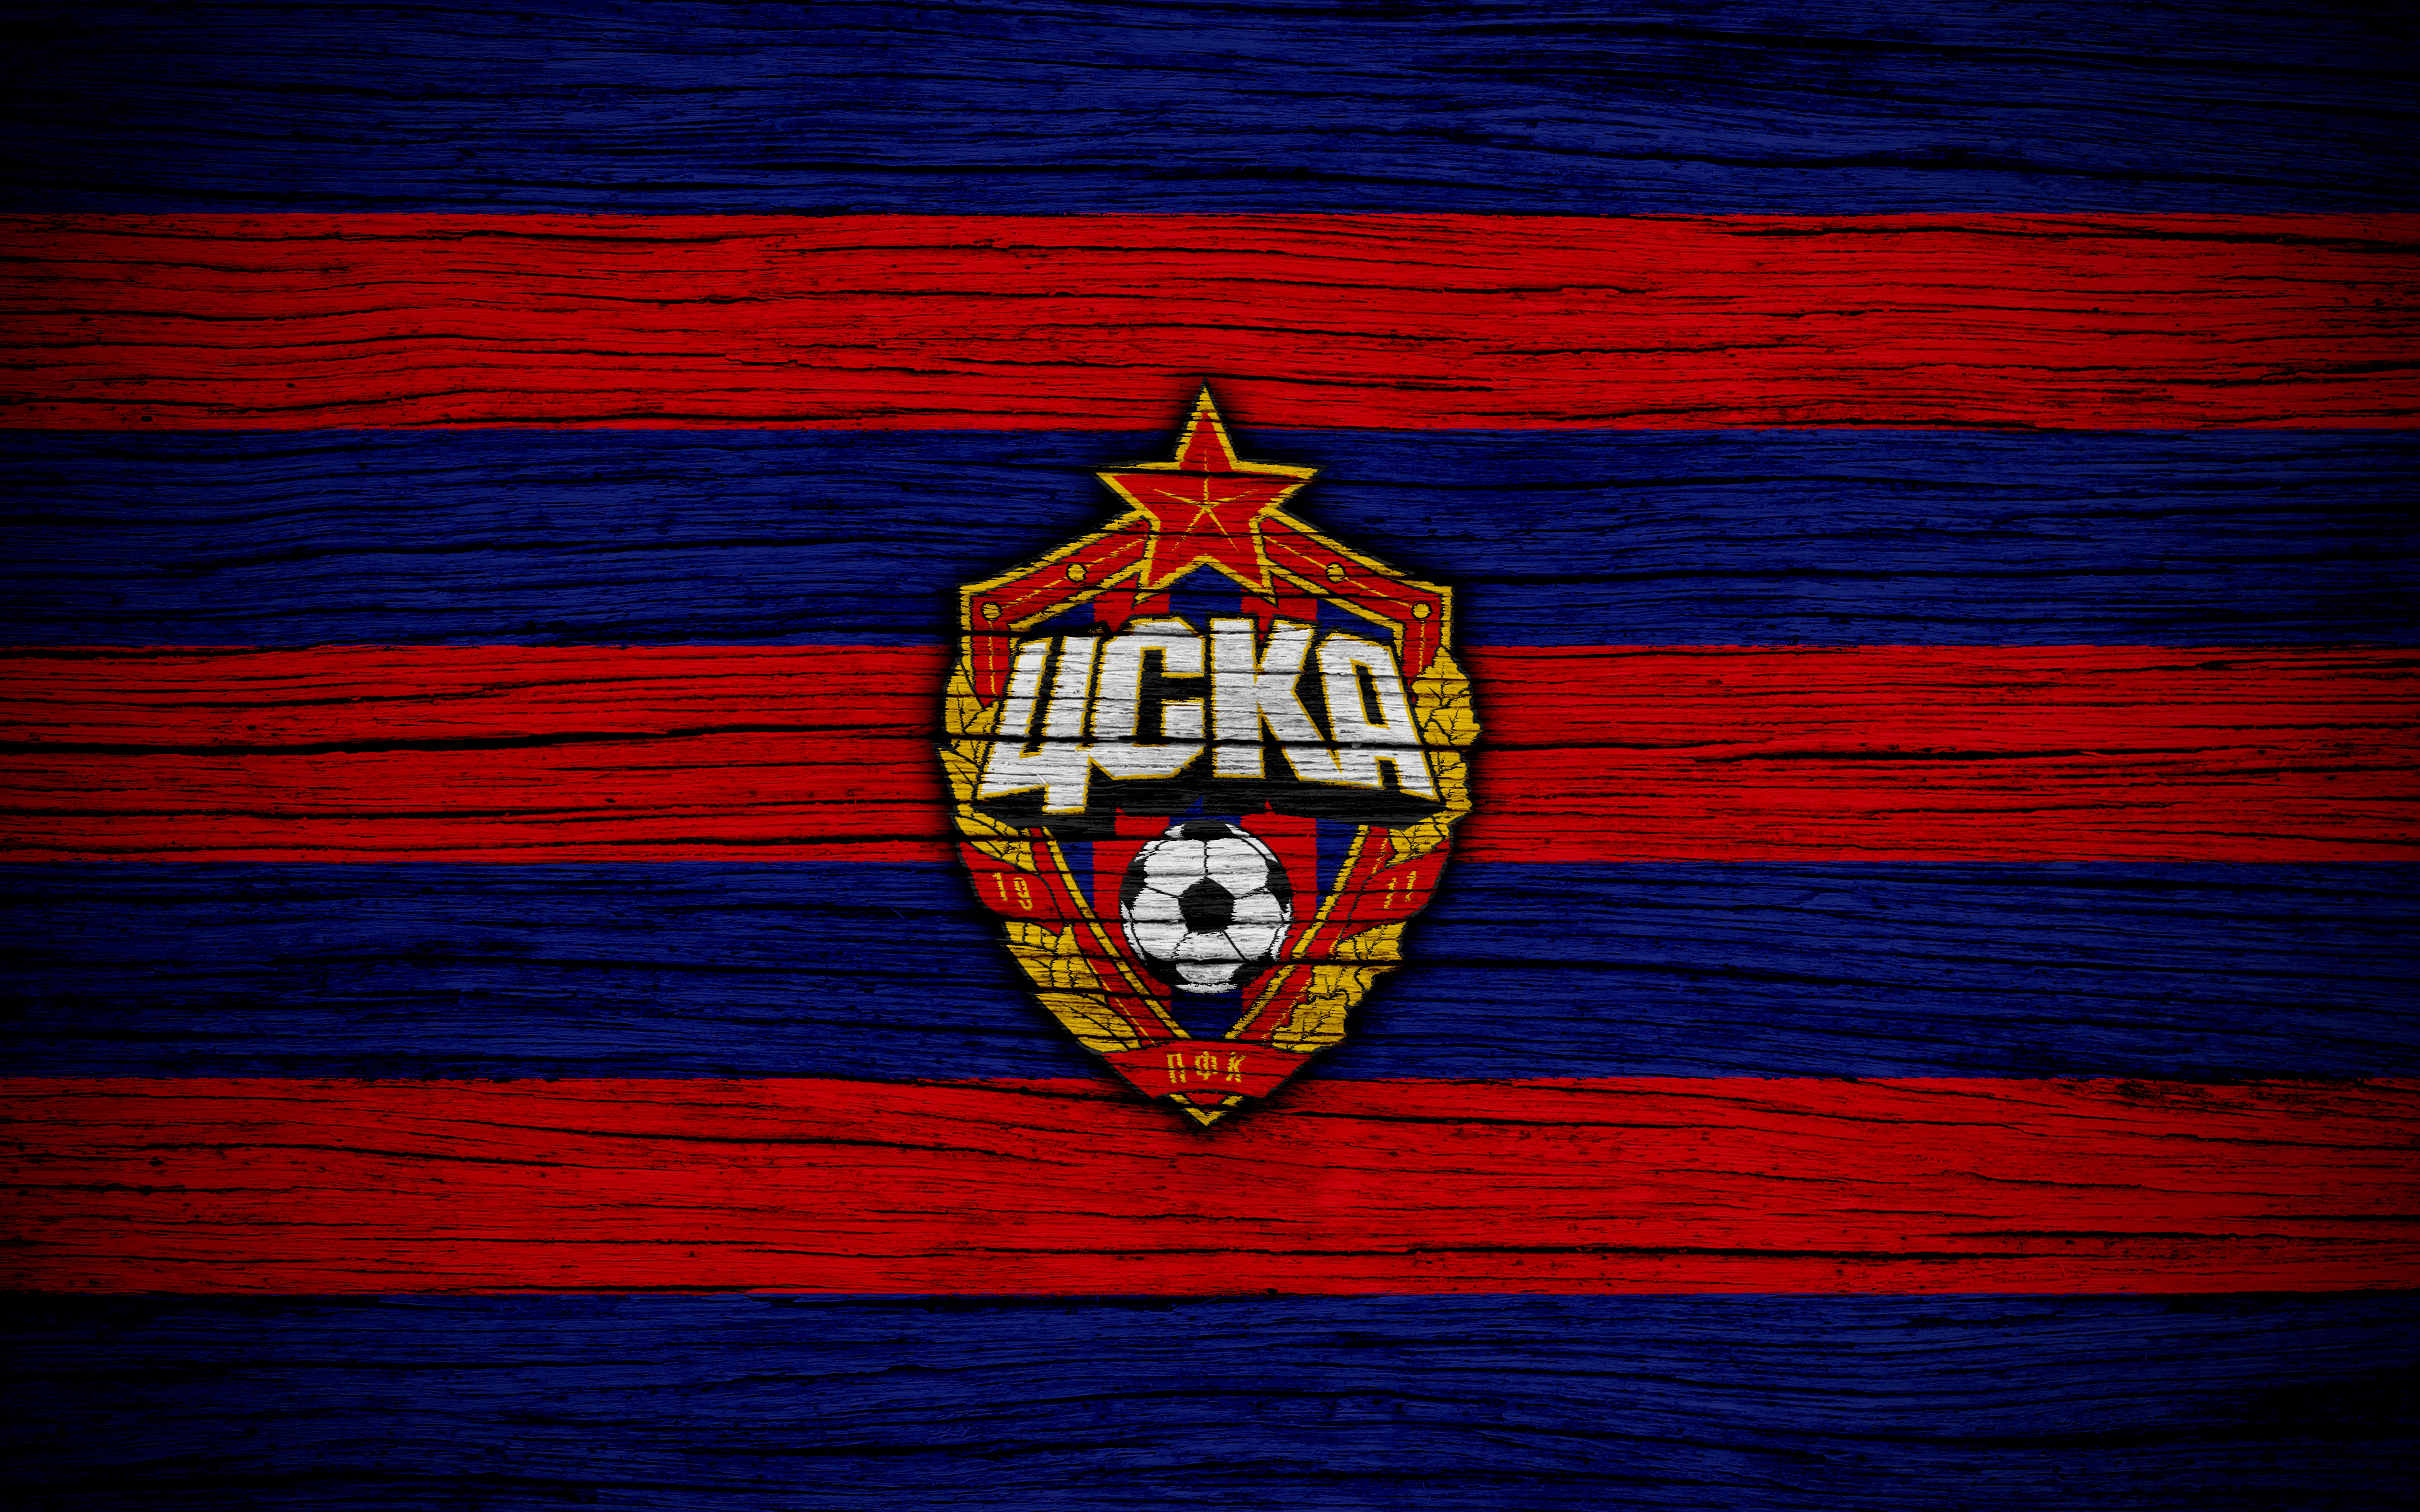 Pfc Cska Moscow 4k Ultra HD Wallpaper Background Image